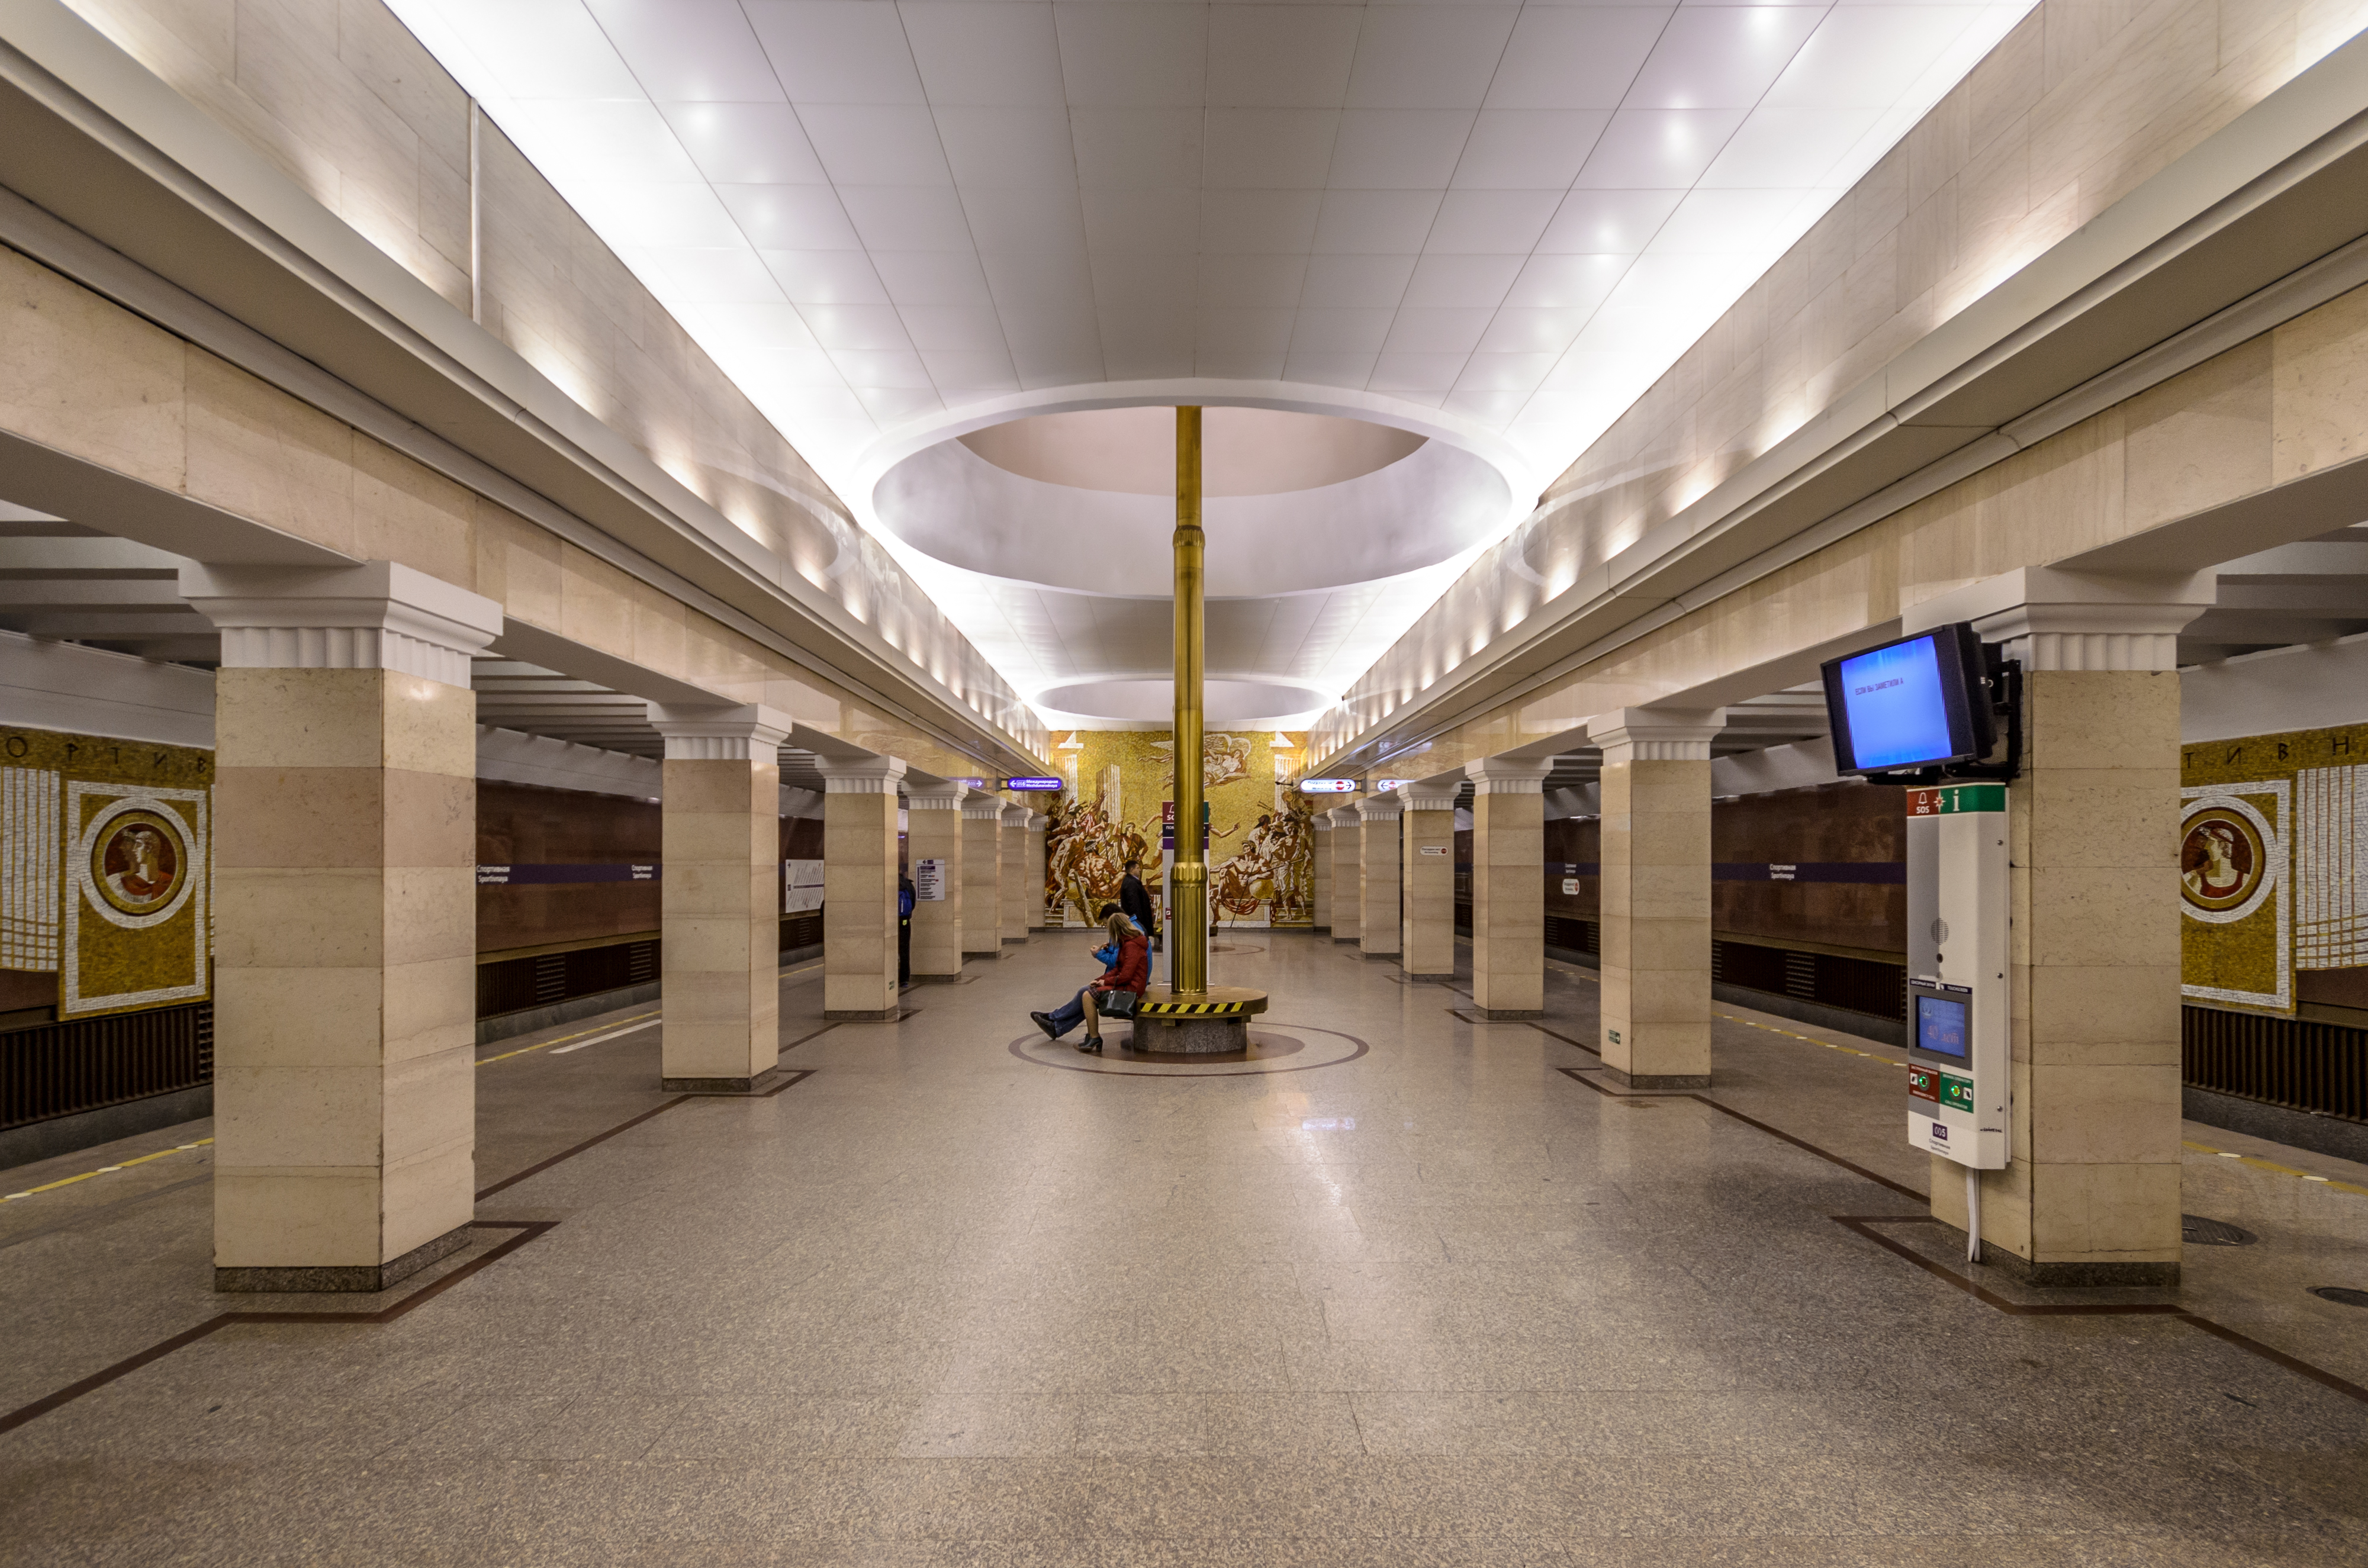 Metro SPB Line5 Sportivnaya Lower Hall 1